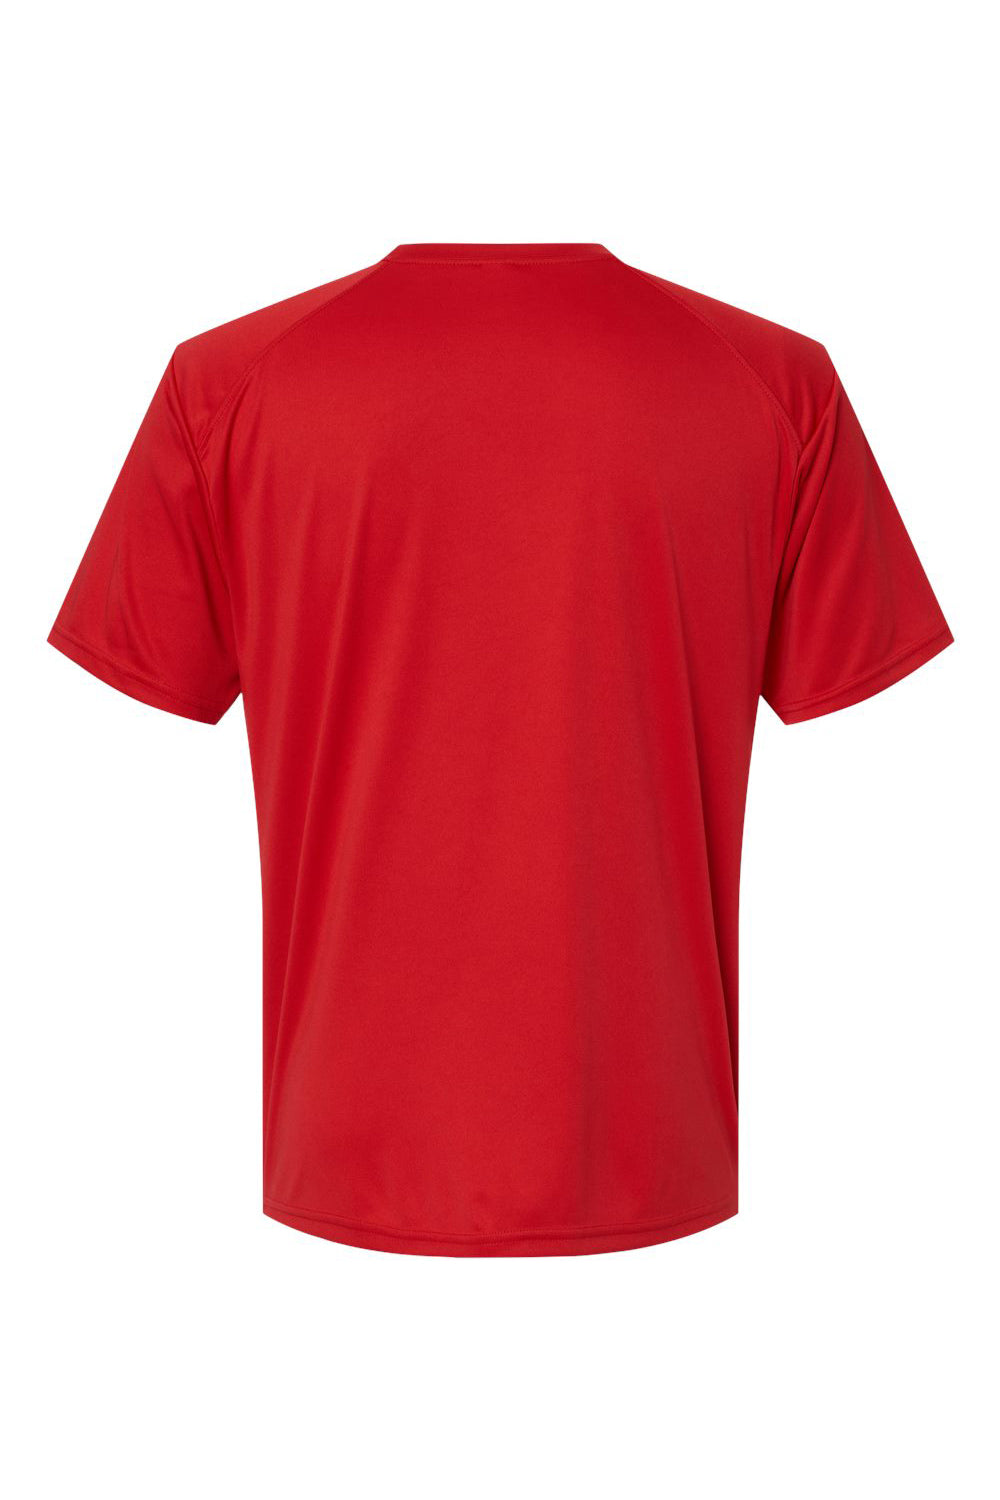 Paragon 200 Mens Islander Performance Short Sleeve Crewneck T-Shirt Red Flat Back